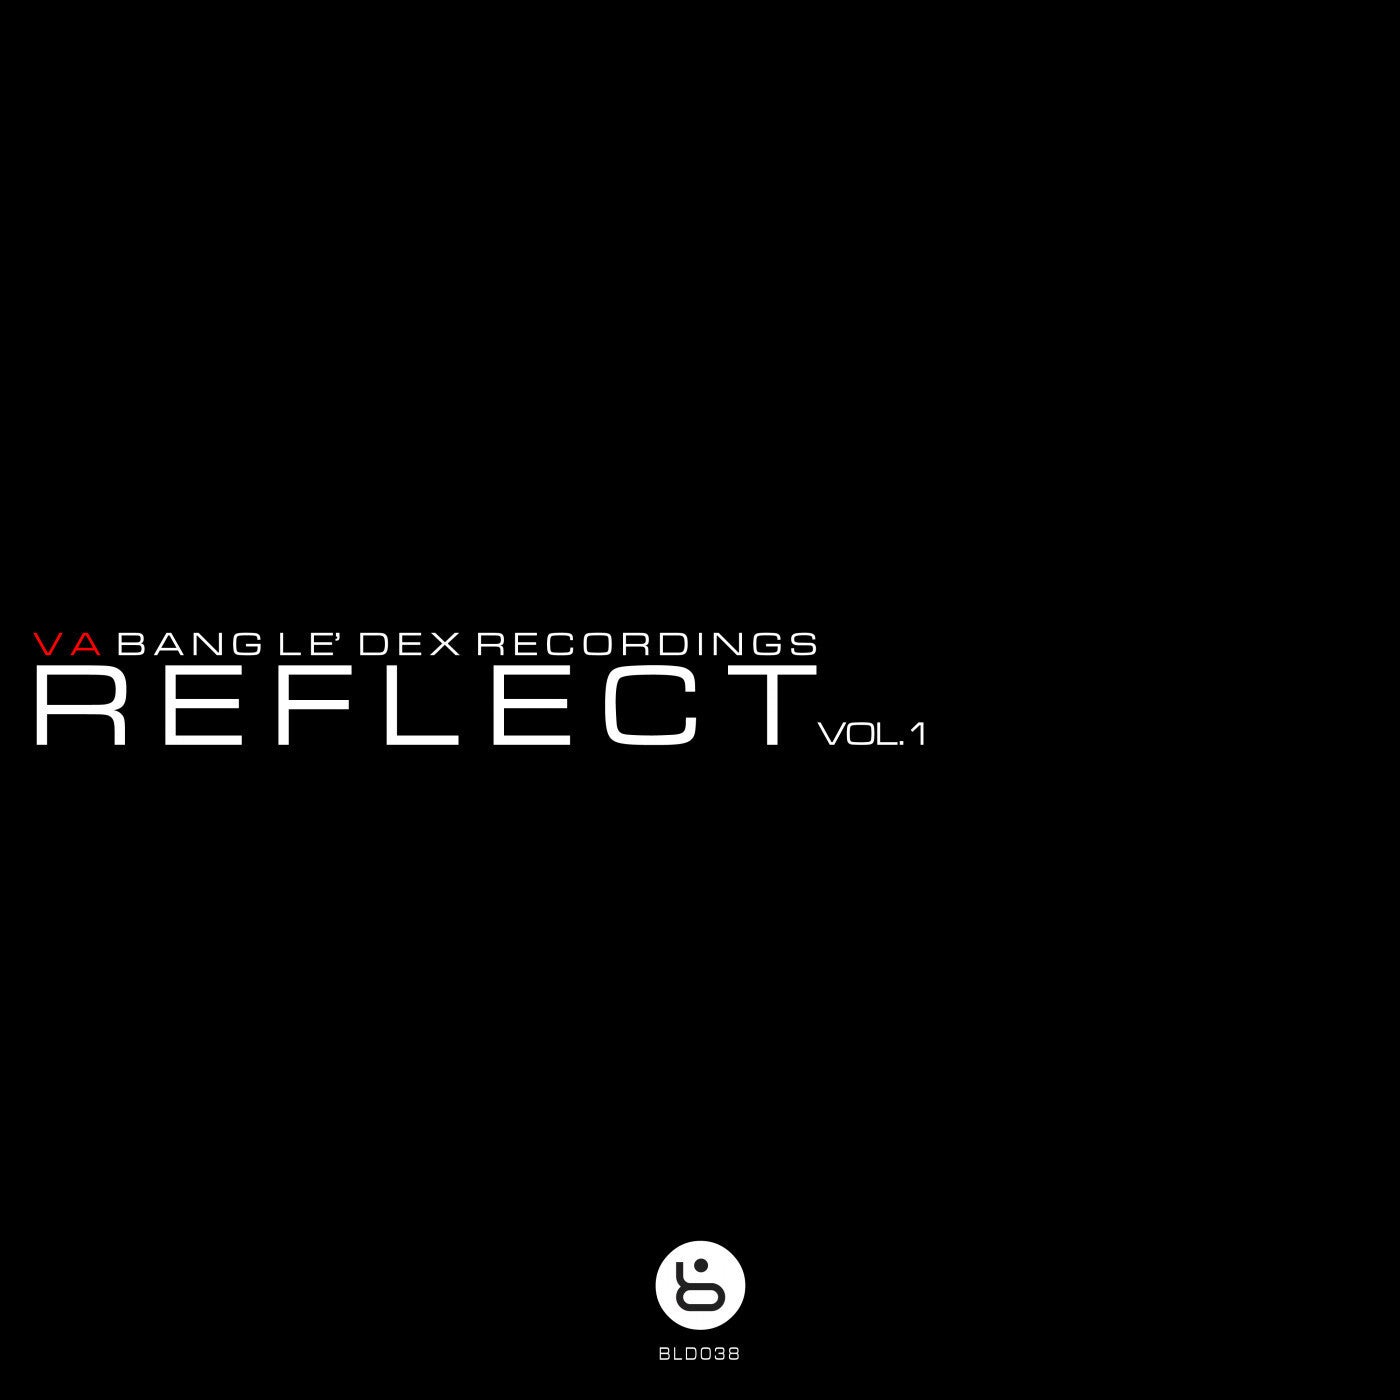 REFLECT VOL.1